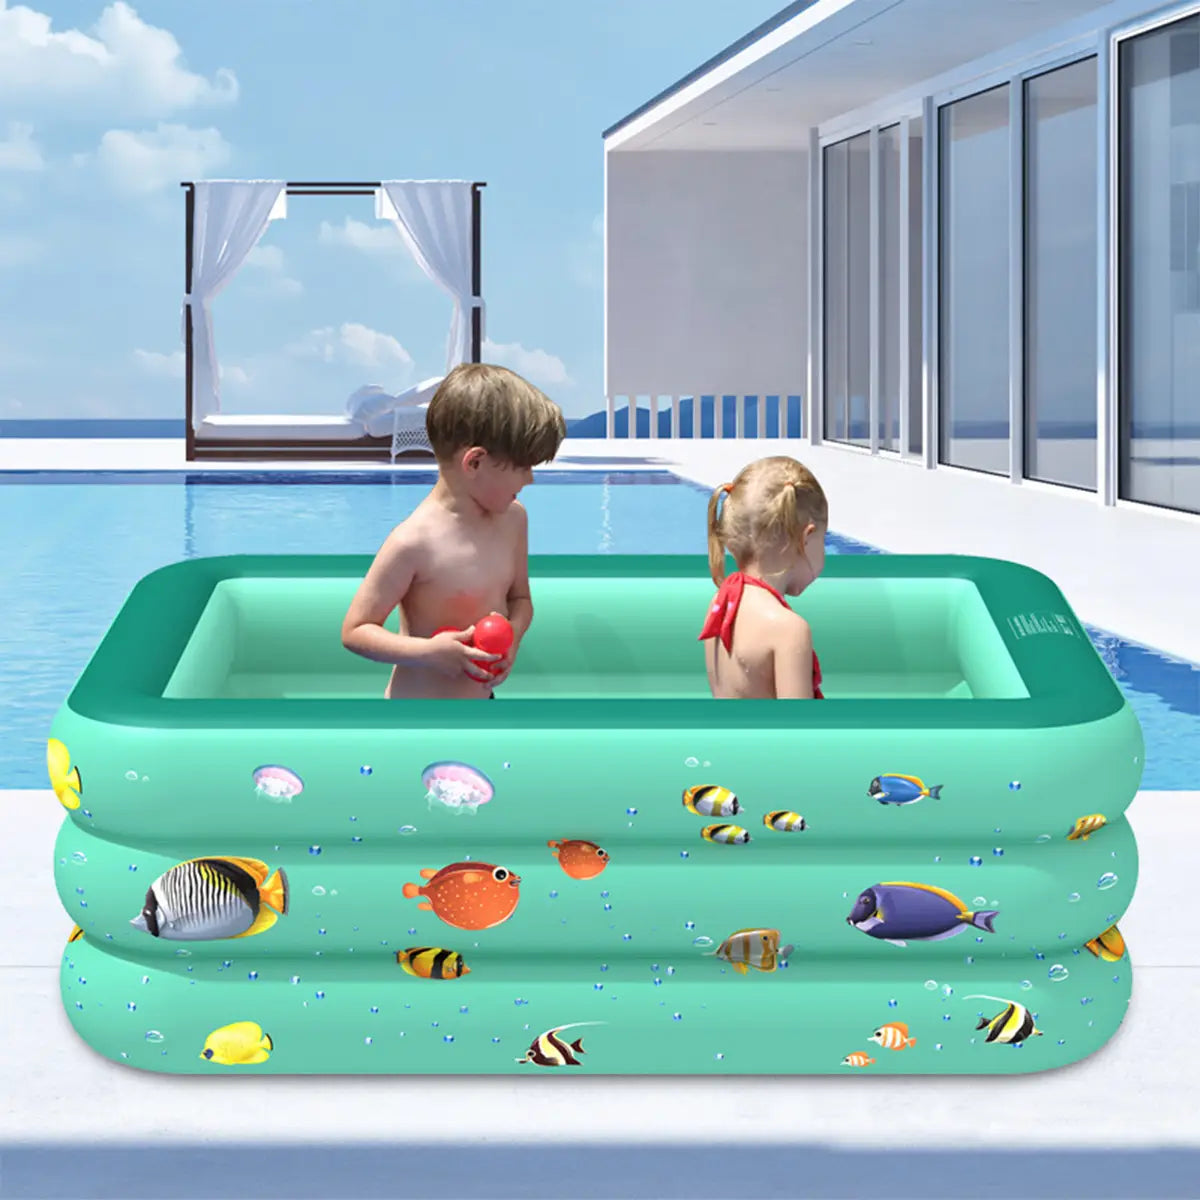 Inflatable Square Kids Swimming Padding Pool Play Bathing